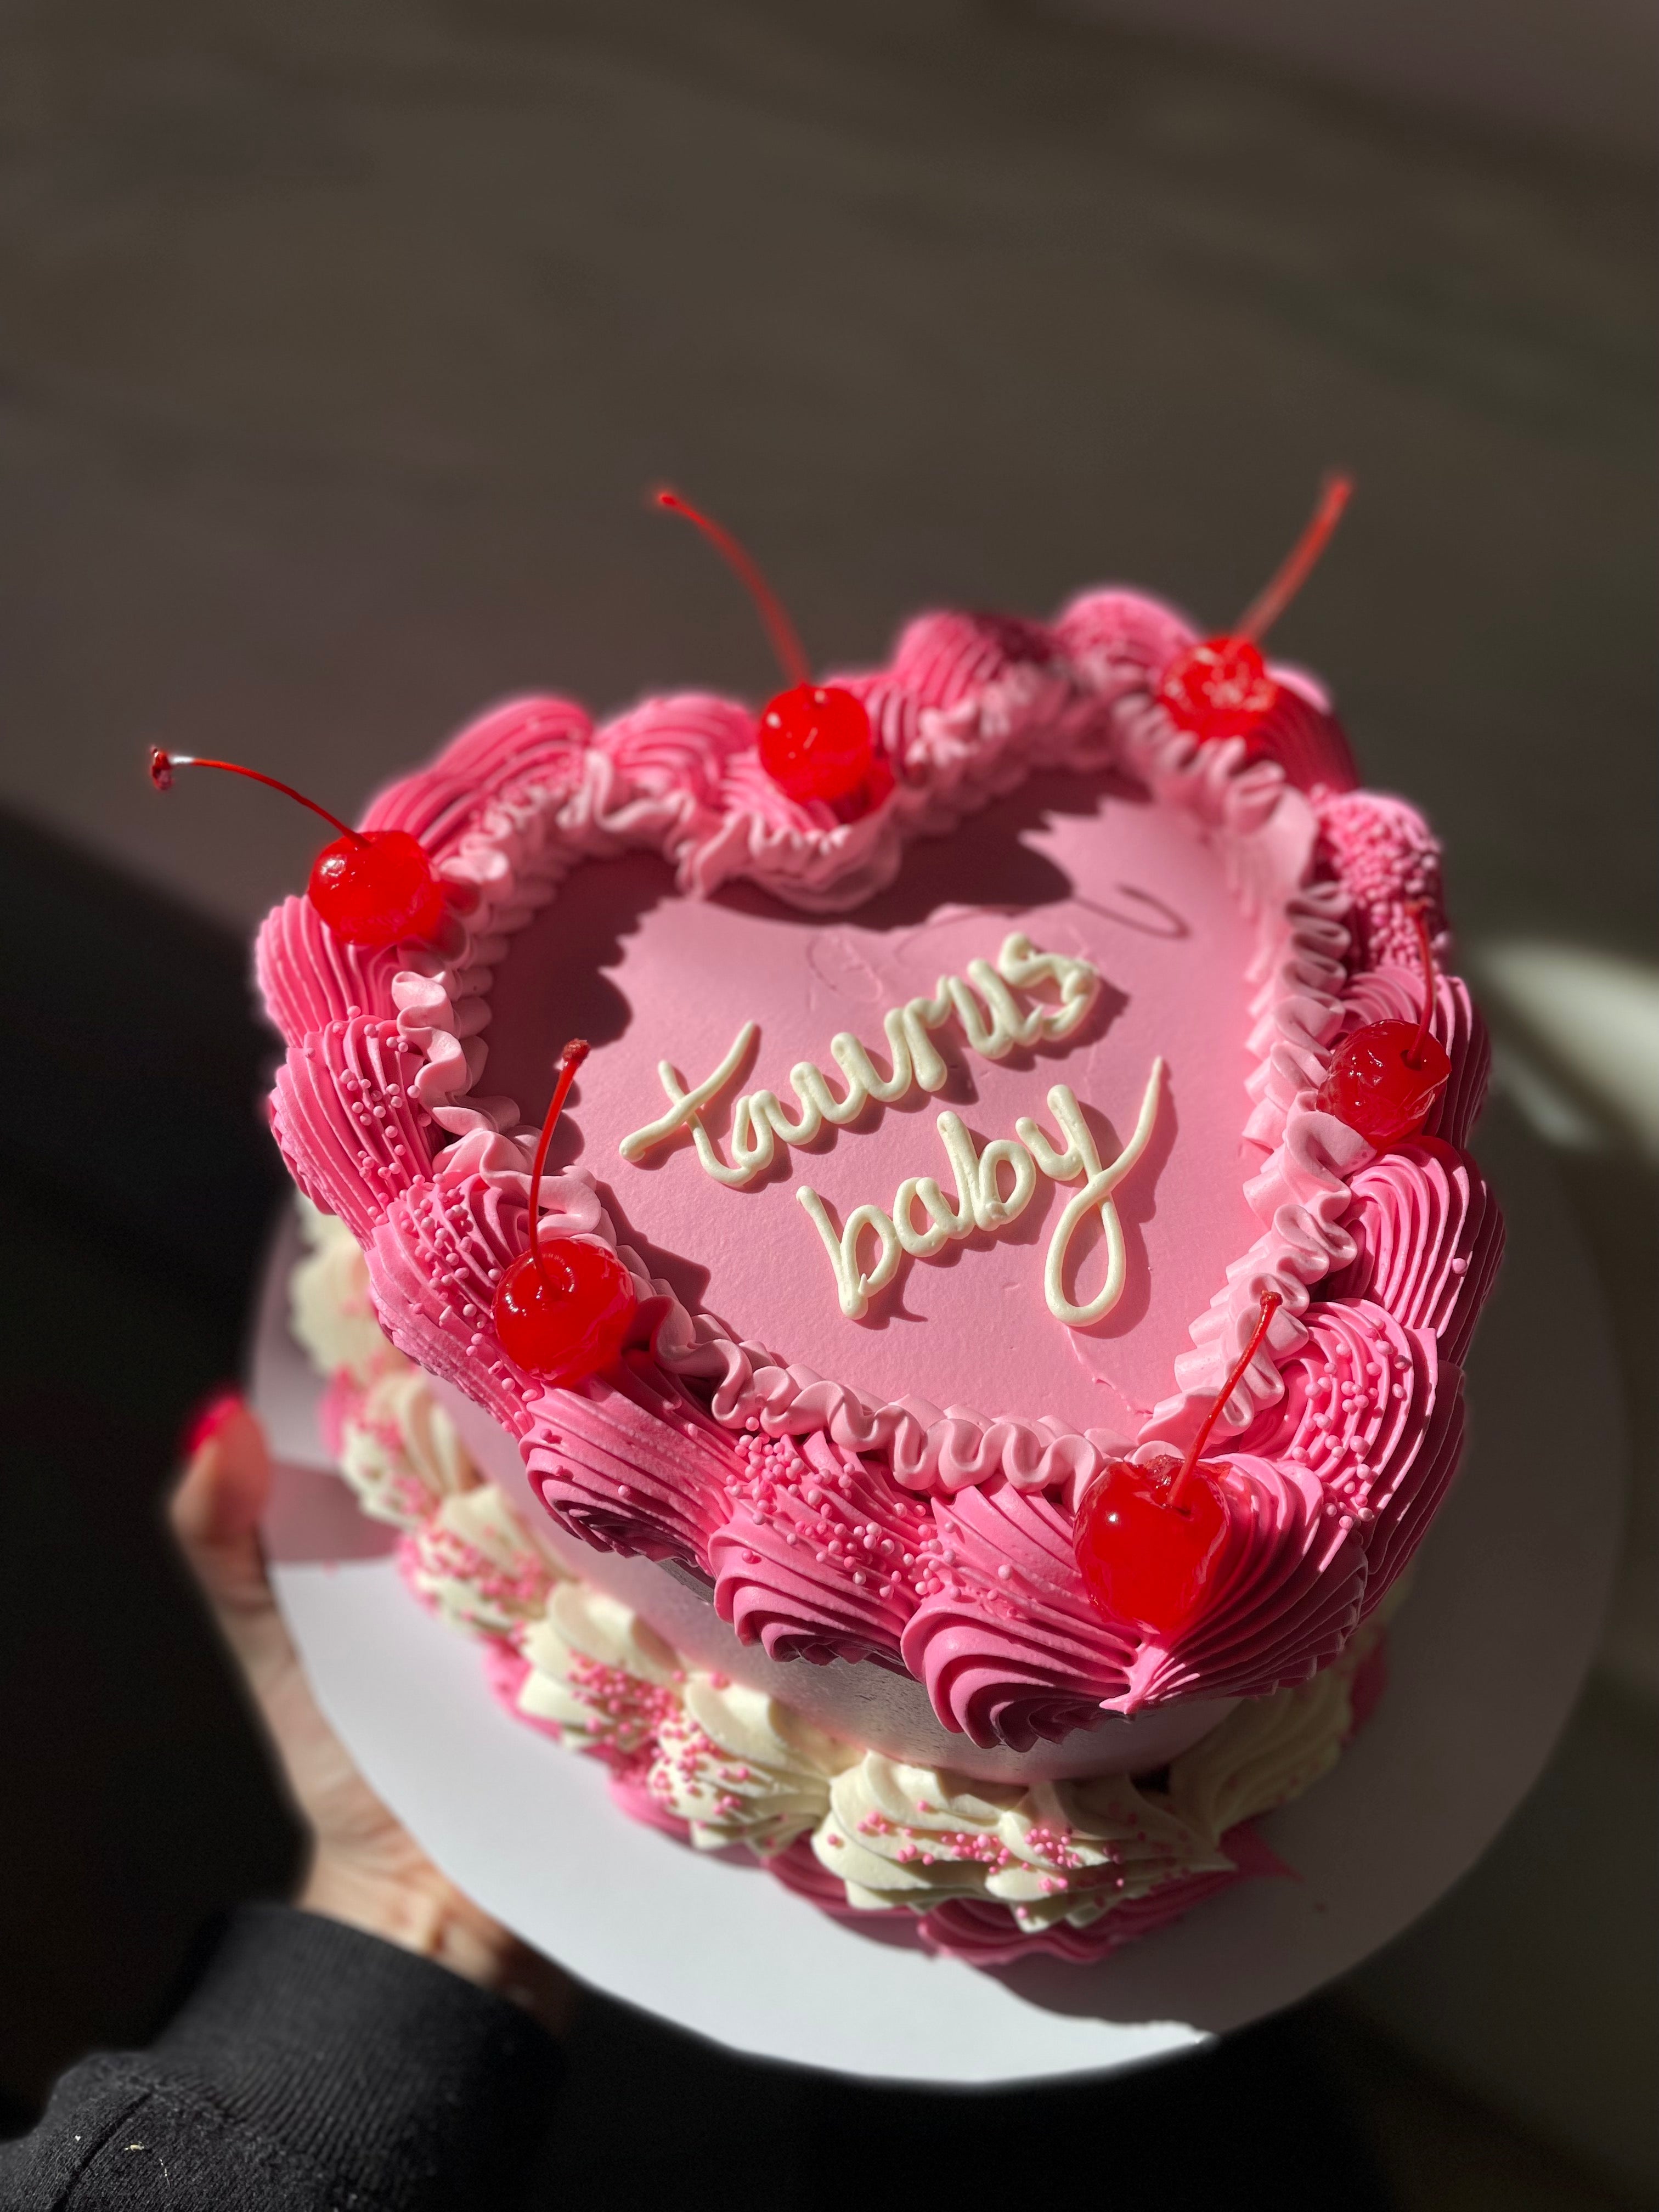 50 Cute Vintage Style Cake Delight Ideas : Pastel Heart Cake